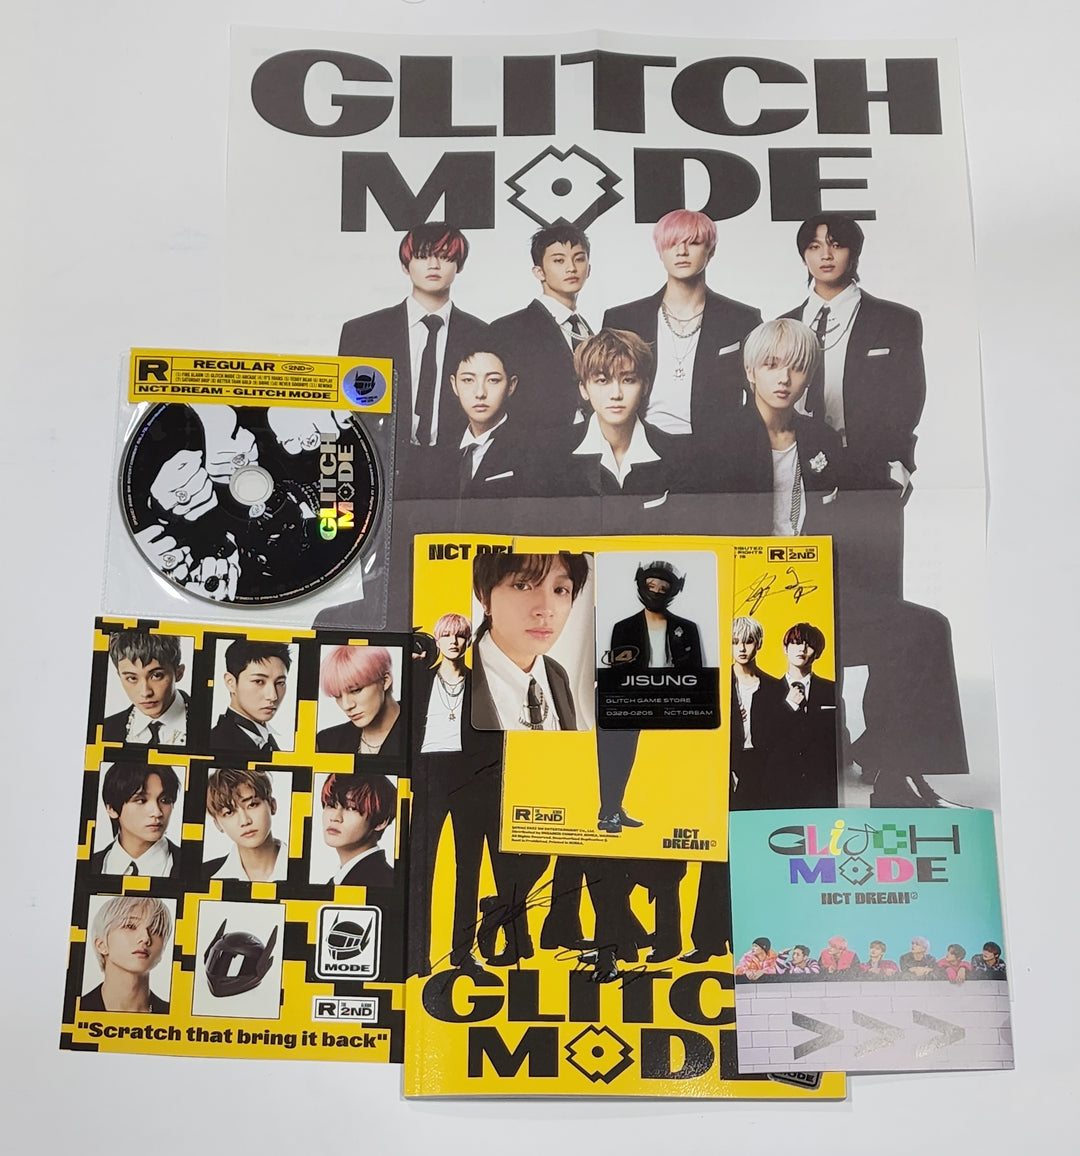 NCT Dream "Glitch Mode" - Hand Autographed(Signed) Promo Album